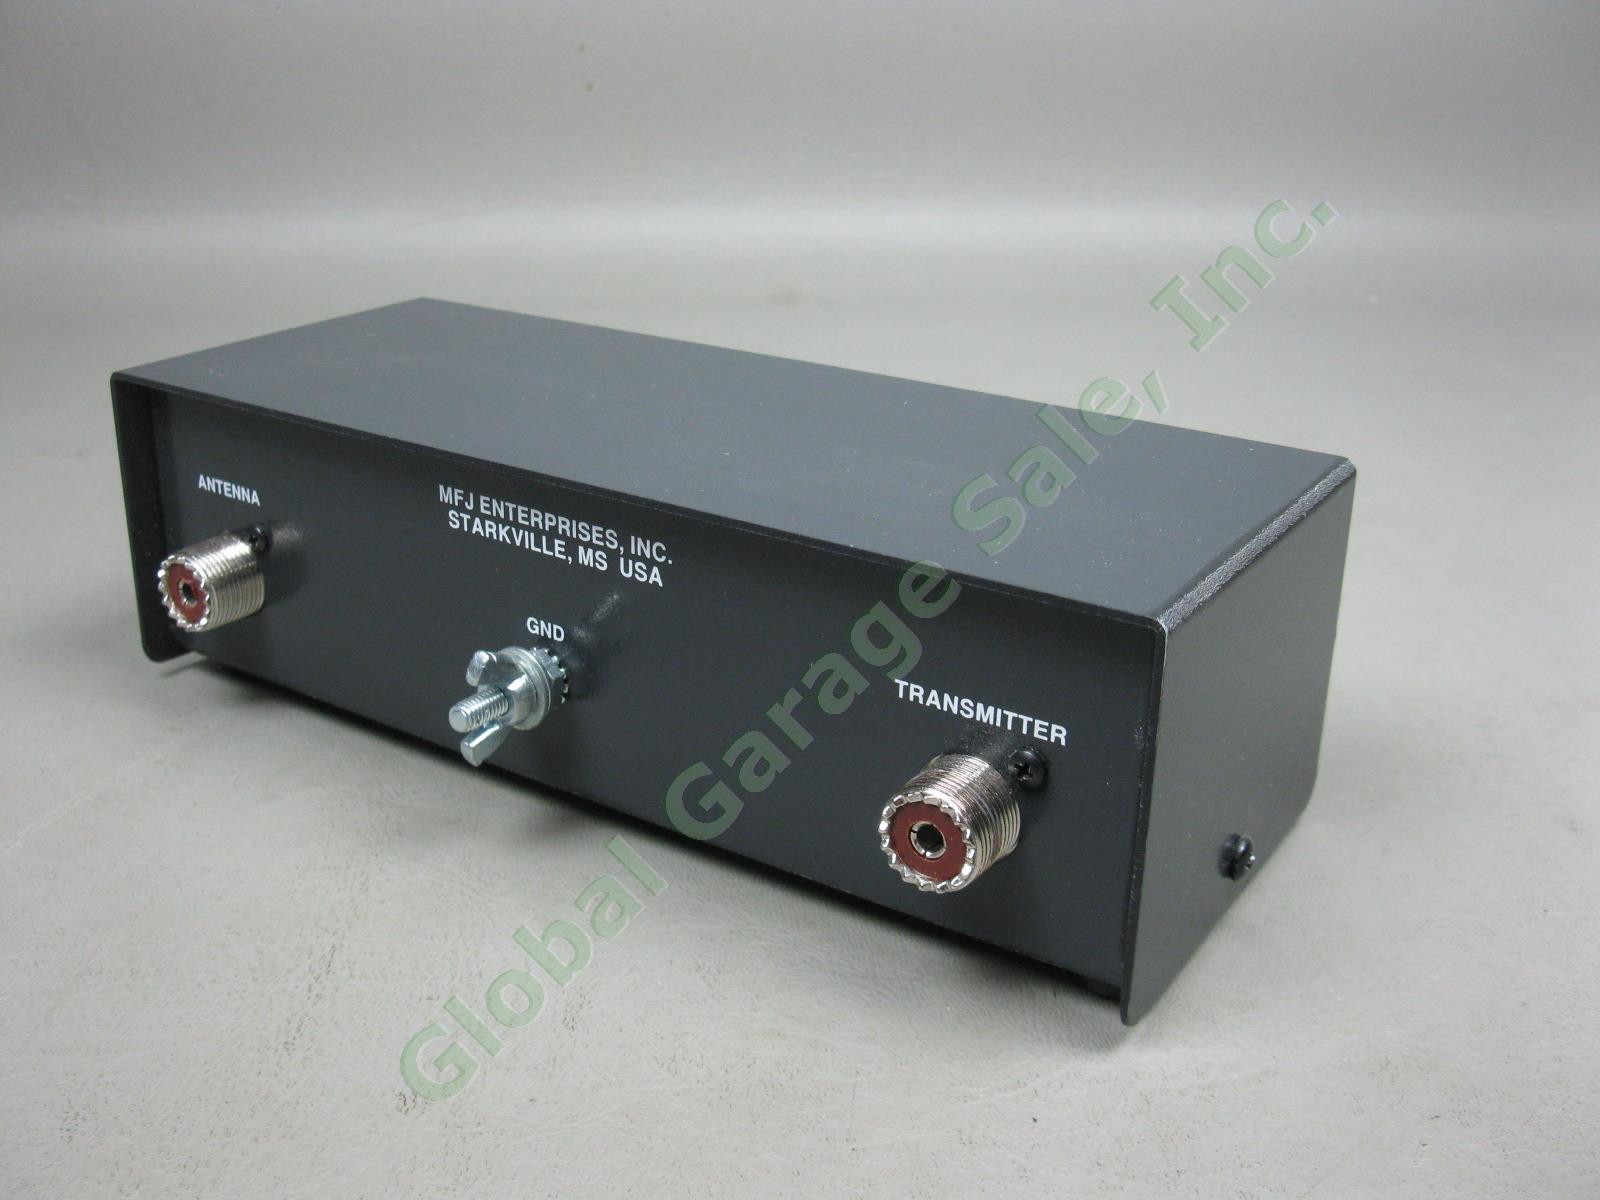 Black MFJ-921 VHF Dual Band Ham Radio Antenna Tuner 144-220MHz Tested Works + NR 3